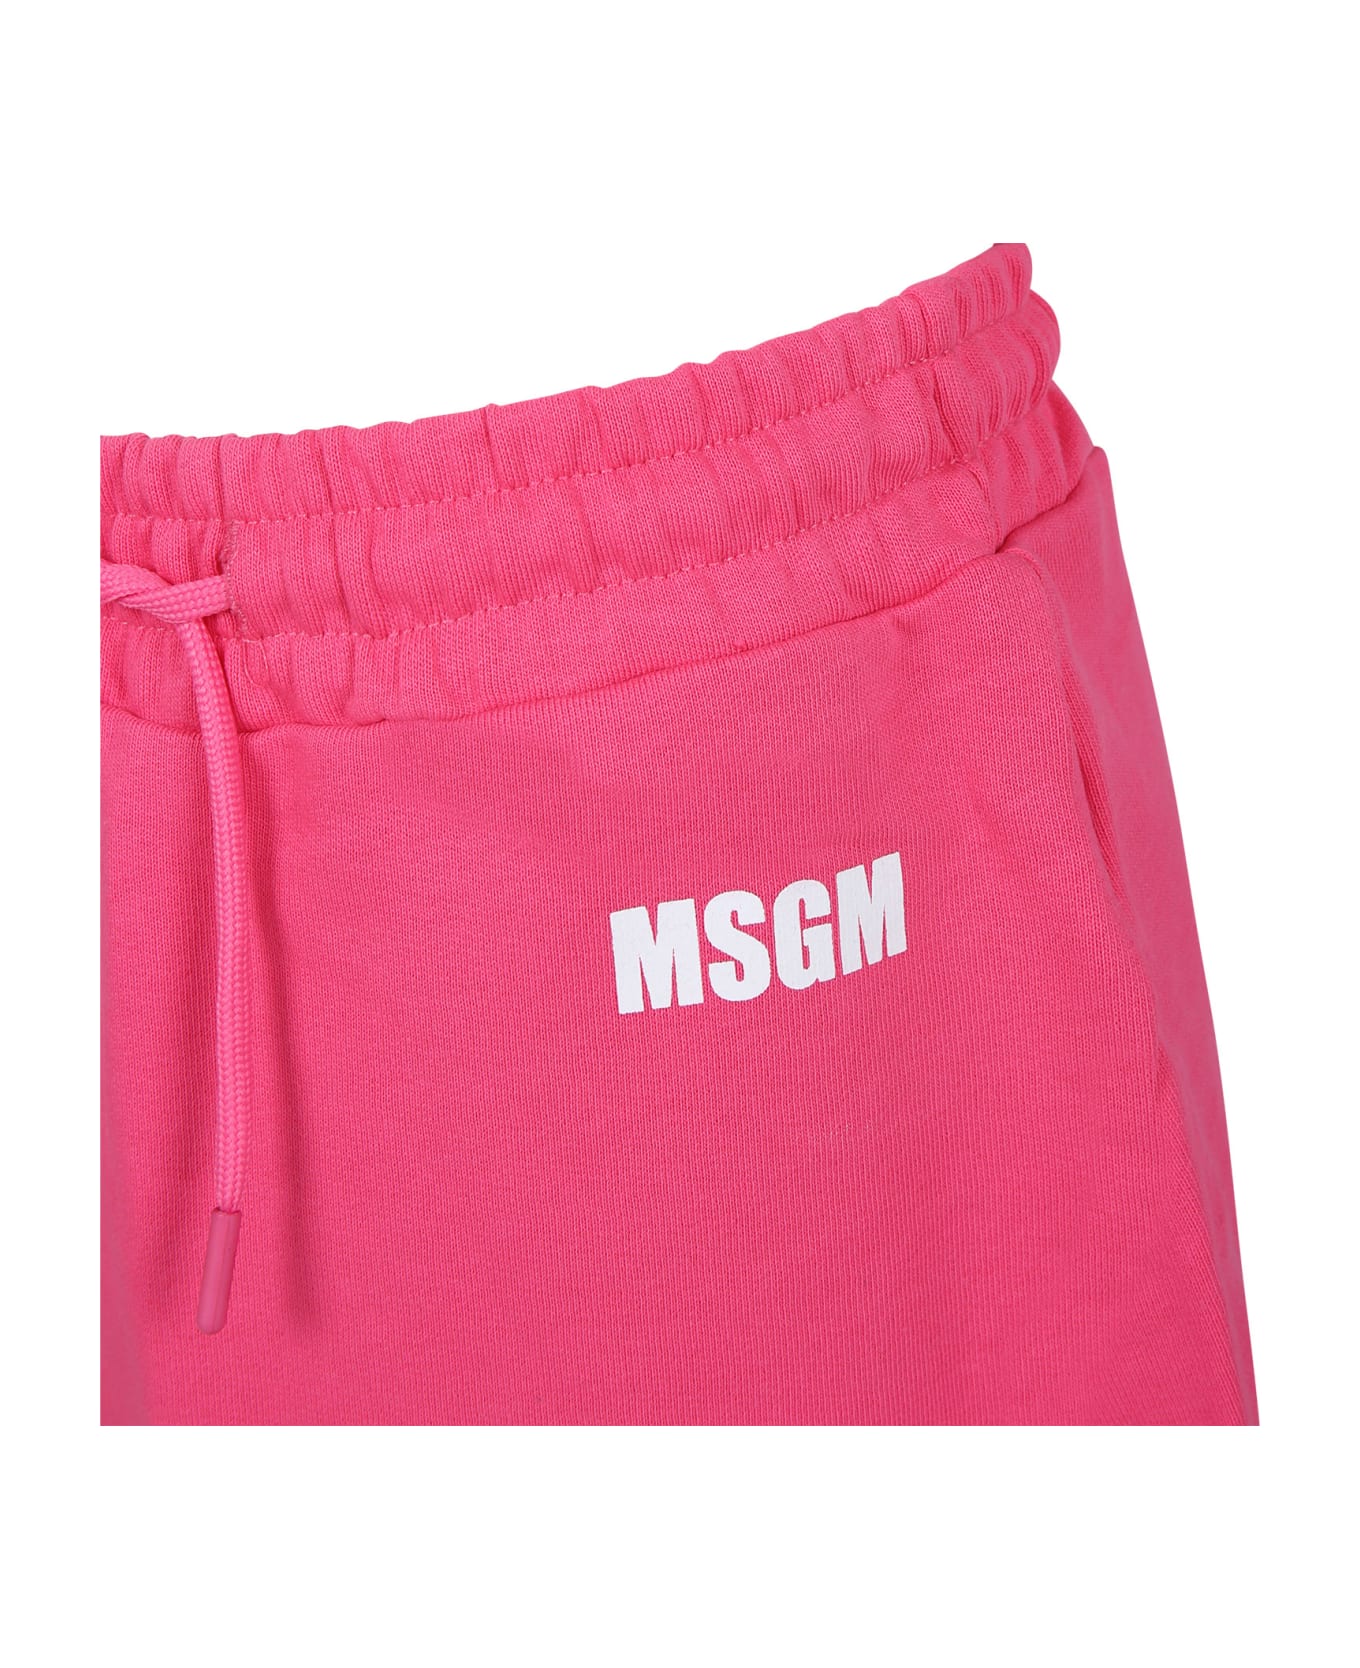 MSGM Fuchsia Skirt For Girl With Logo And Writing - Fuchsia